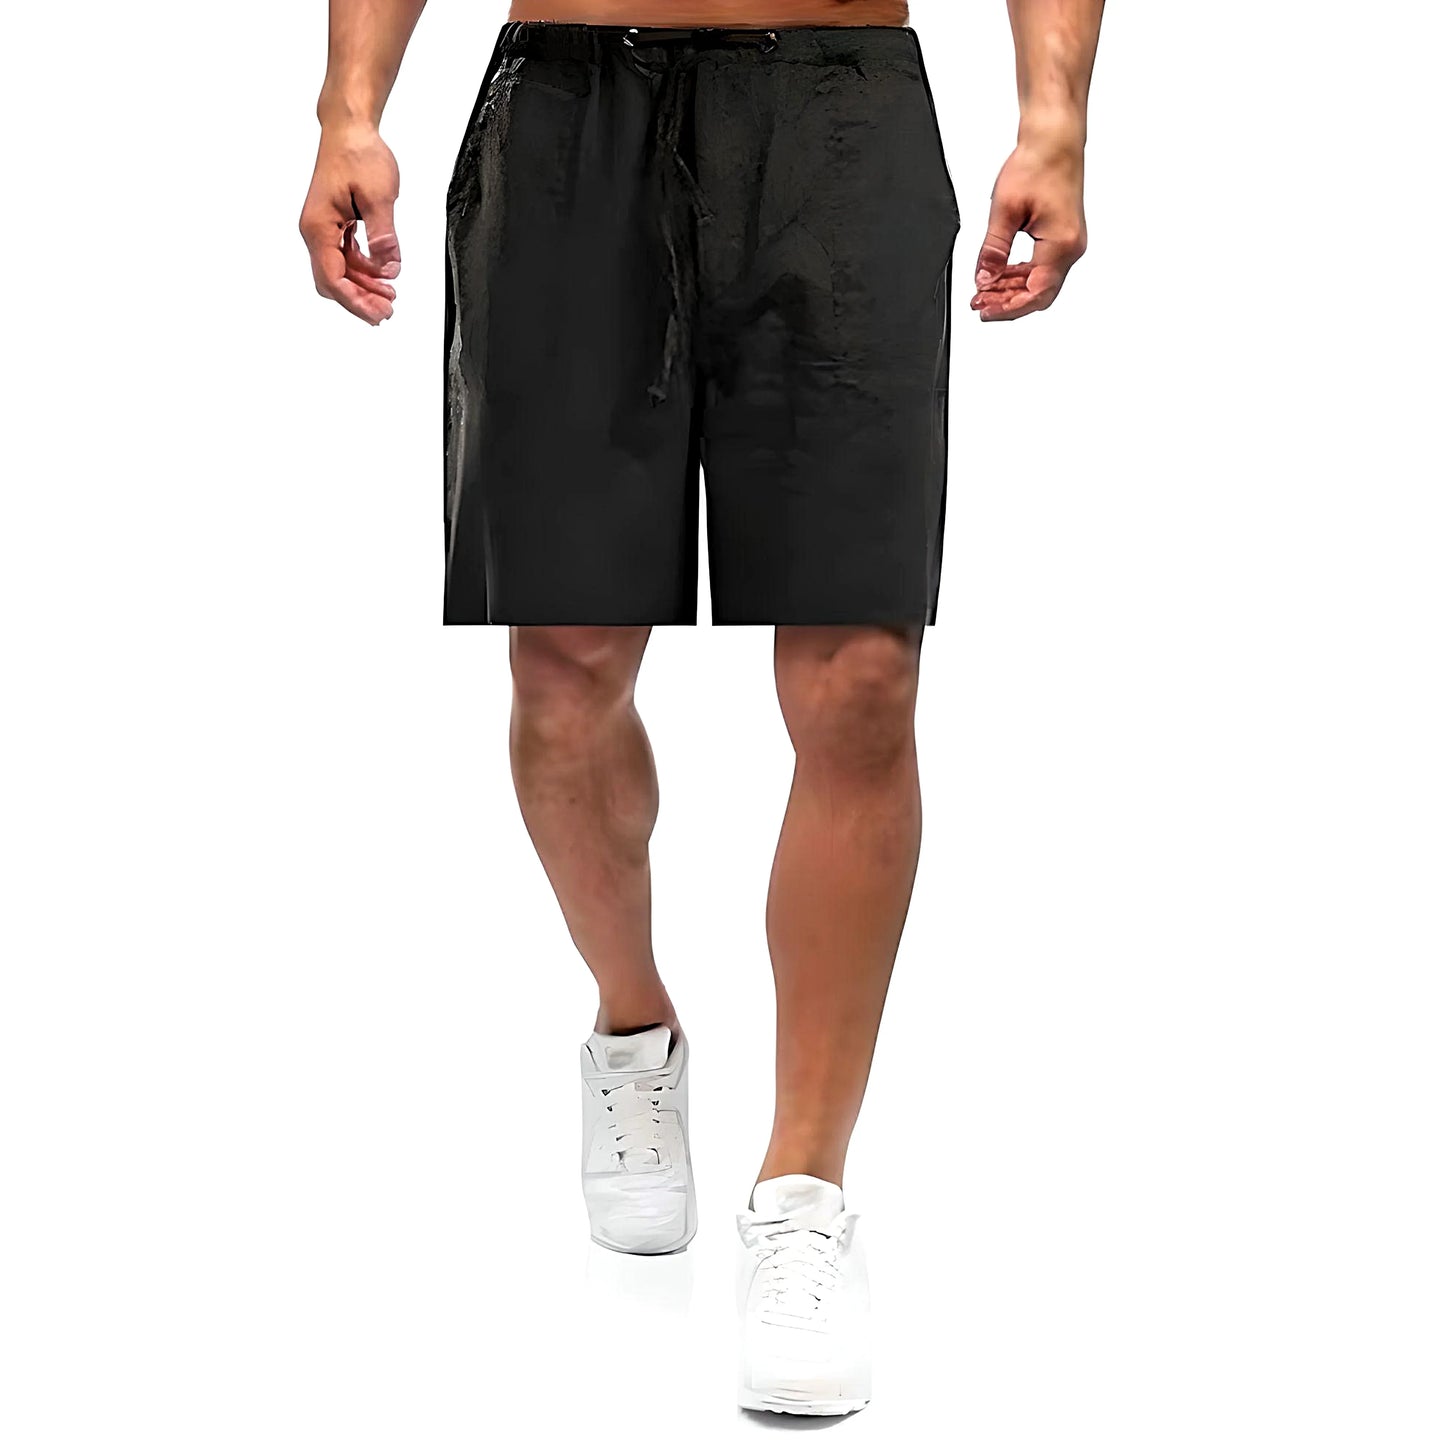 Charles | Casual Linen Shorts - Black / M - AMVIM